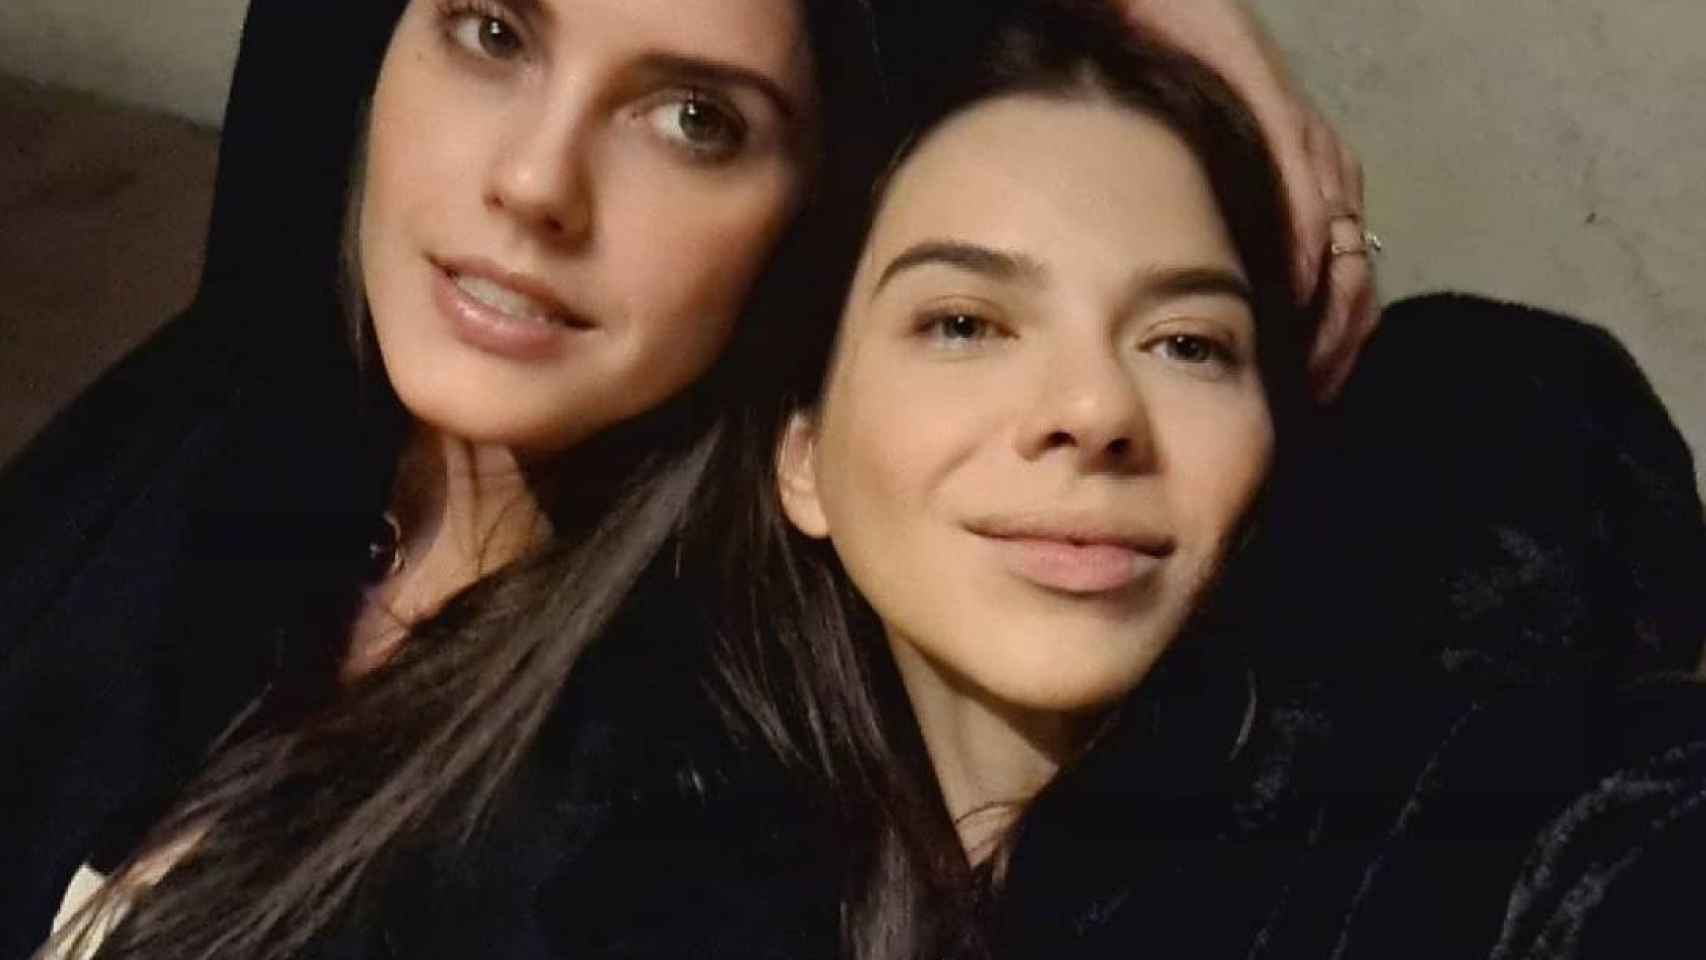 Fernanda Rocha Kanner y Nina Rios, madre e hija 'influencers' / INSTAGRAM